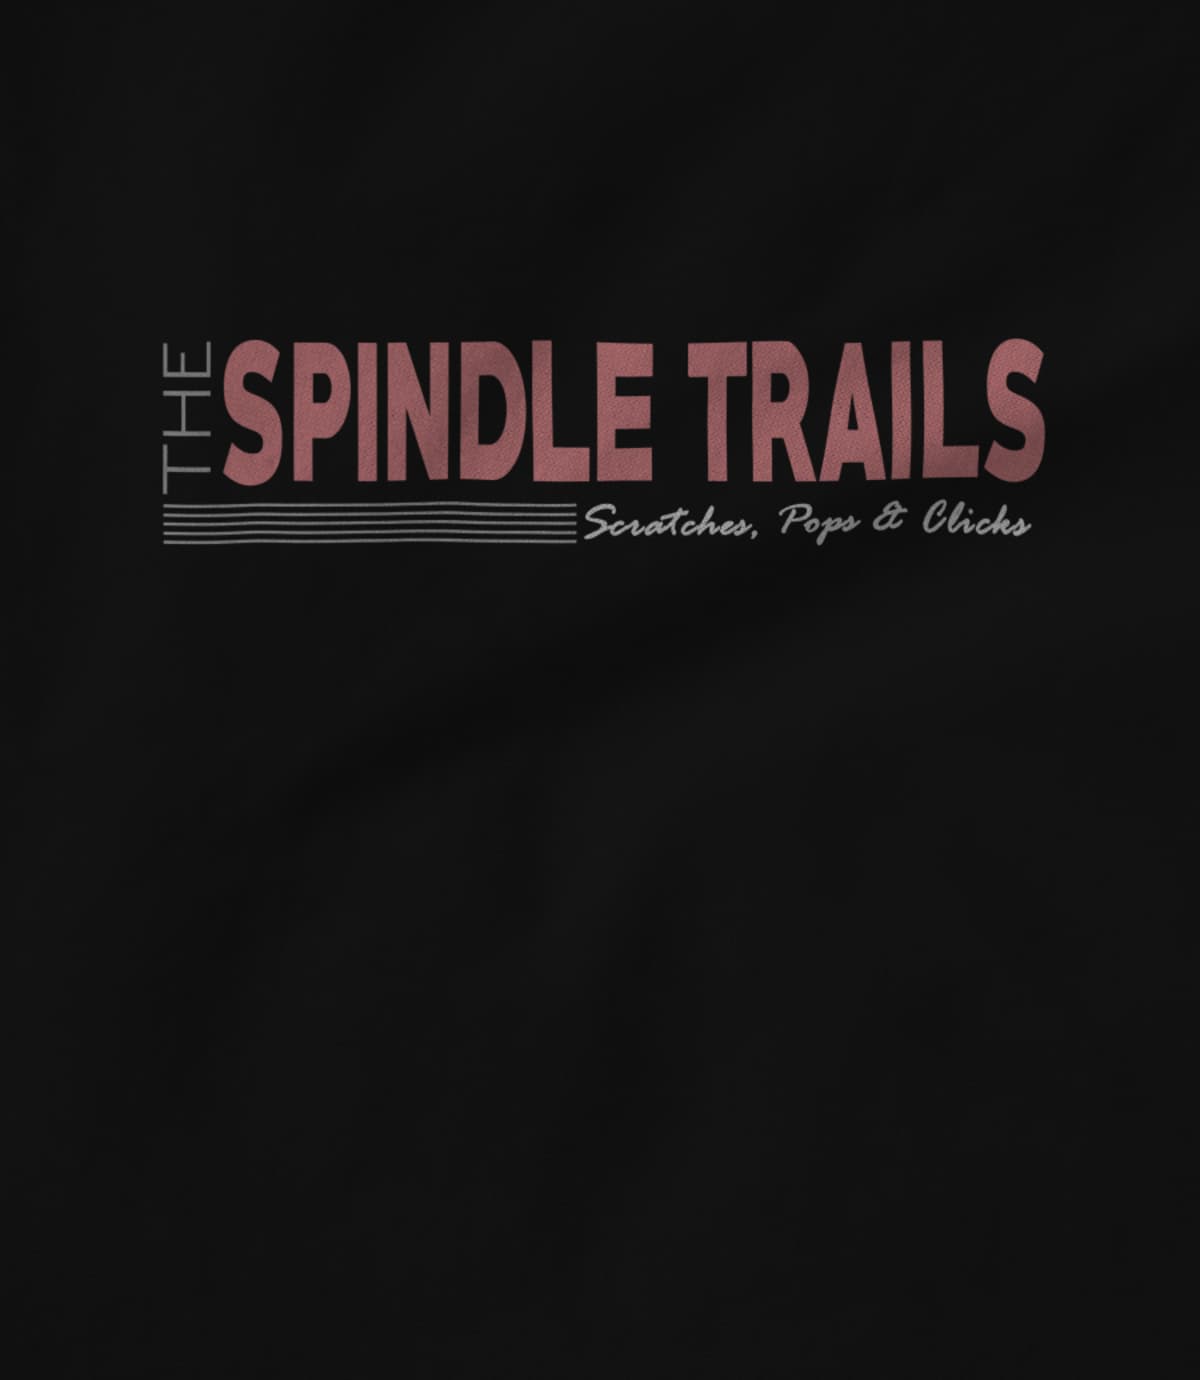 Spindle trails scratches pops   clicks   blue 1473083748